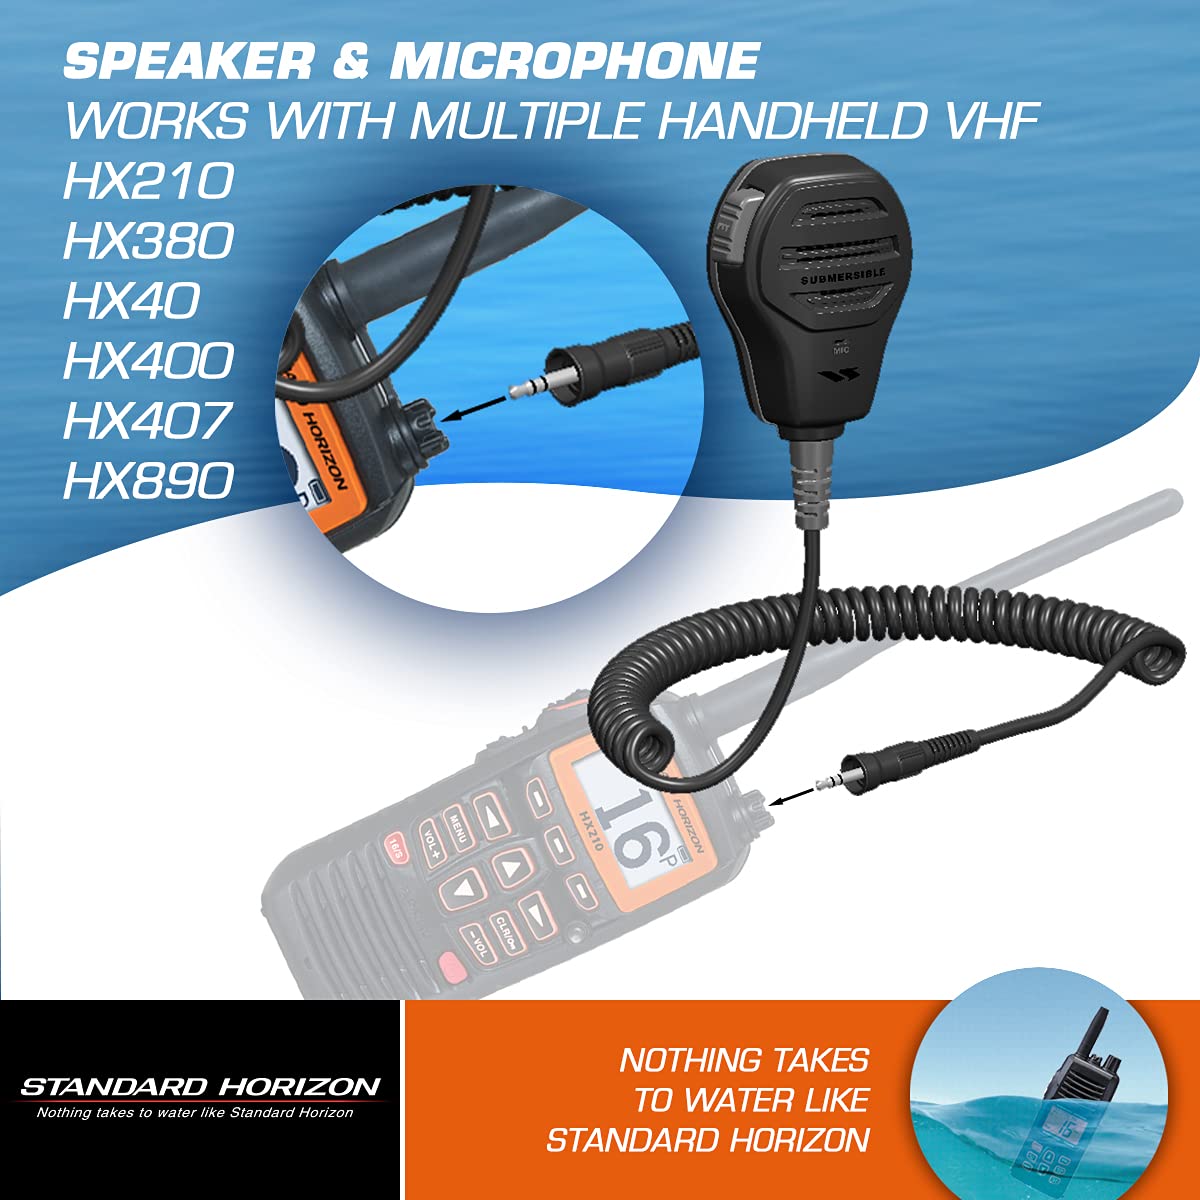 Standard Horizon MH-73A4B Speaker/Microphone Black, Small